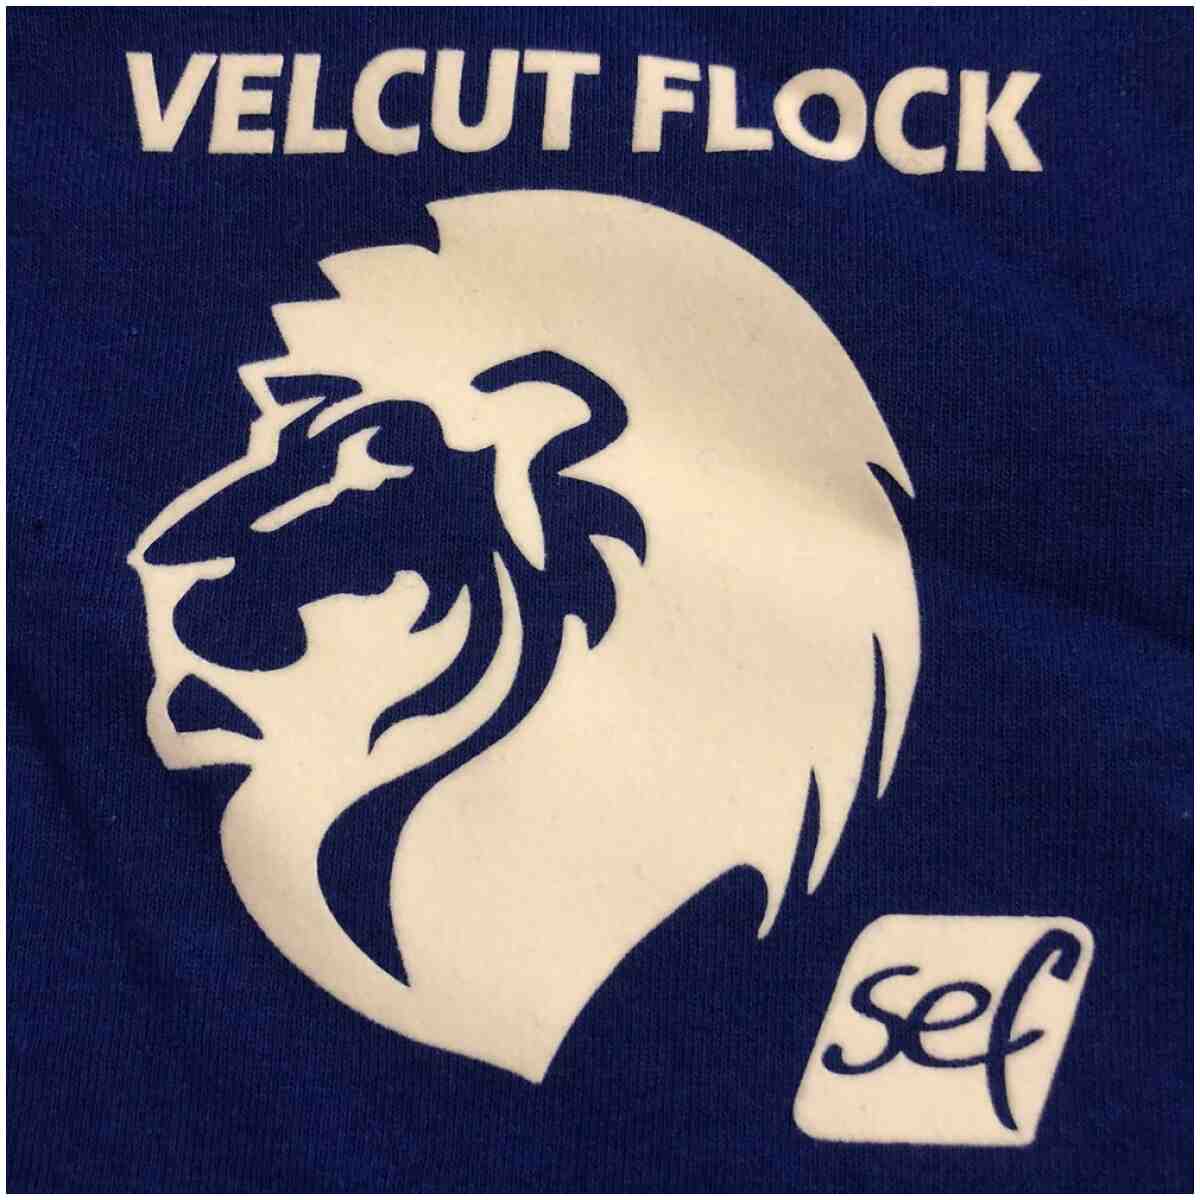 Velcut Evo Flock Heat Transfer Vinyl 19.7" SEF AMERICA®